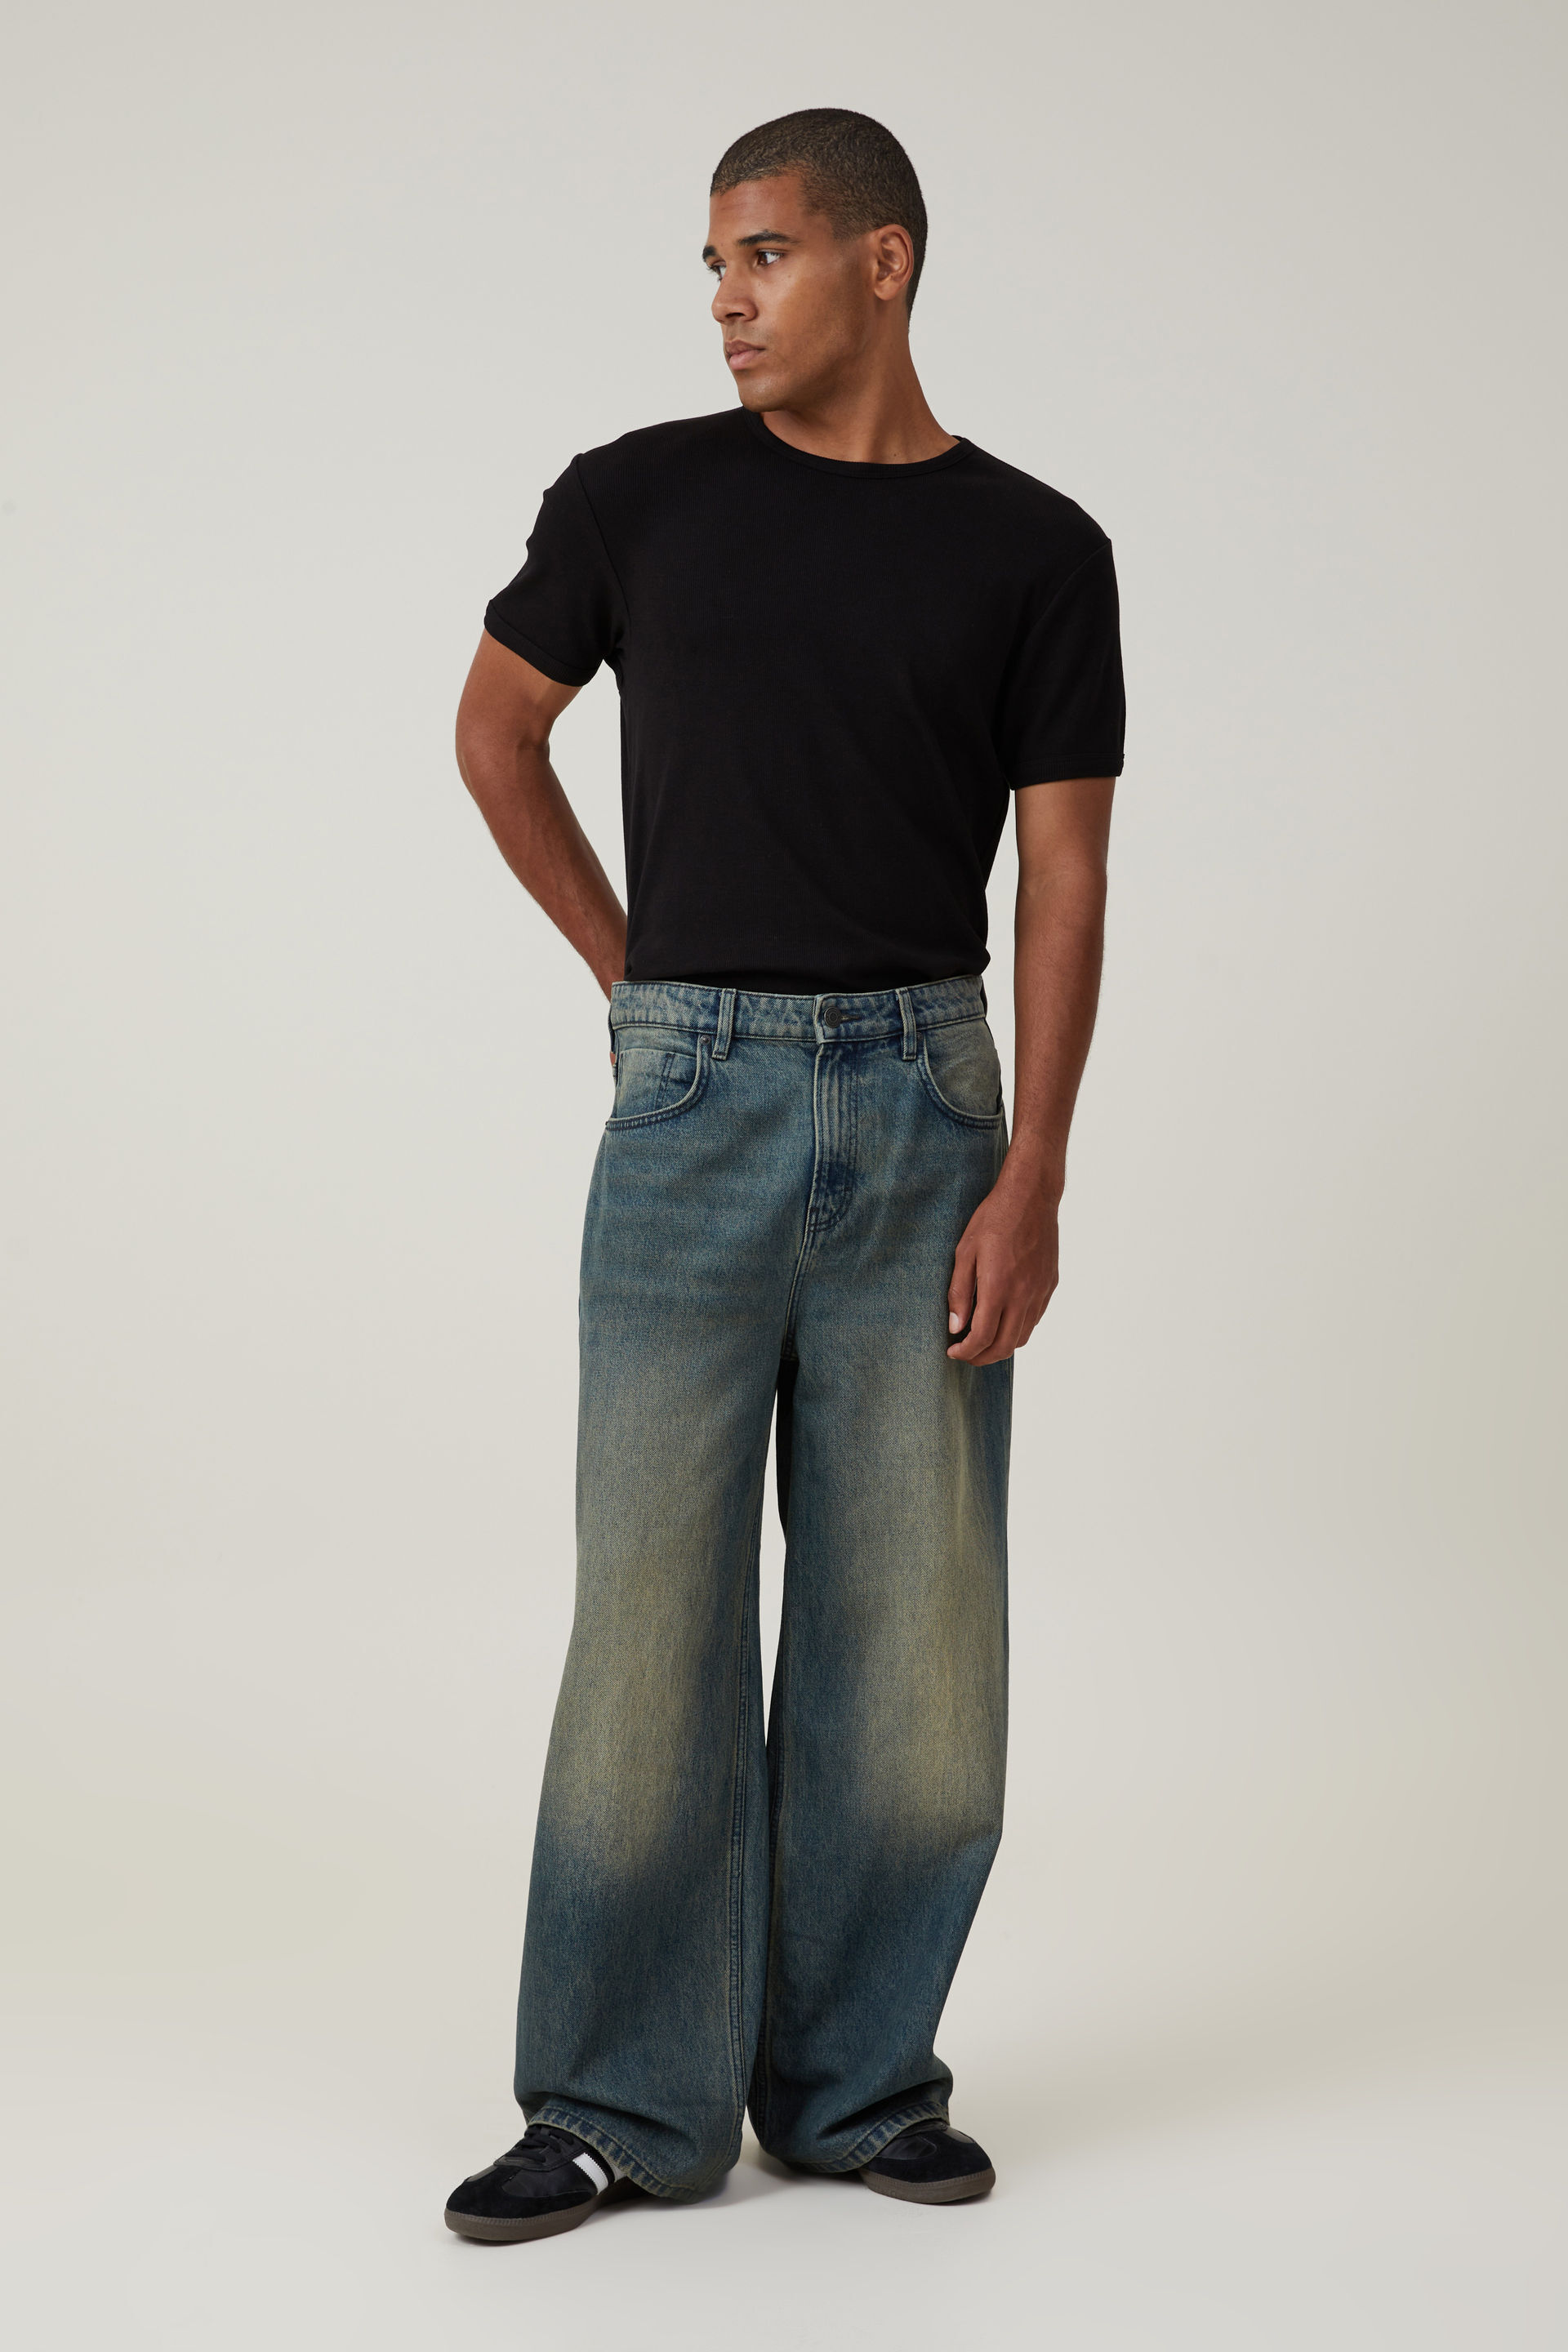 Blue Cotton Denim Jeans For Men in Bellary at best price by Sri Sai  Raghavendra Enterprise - Justdial